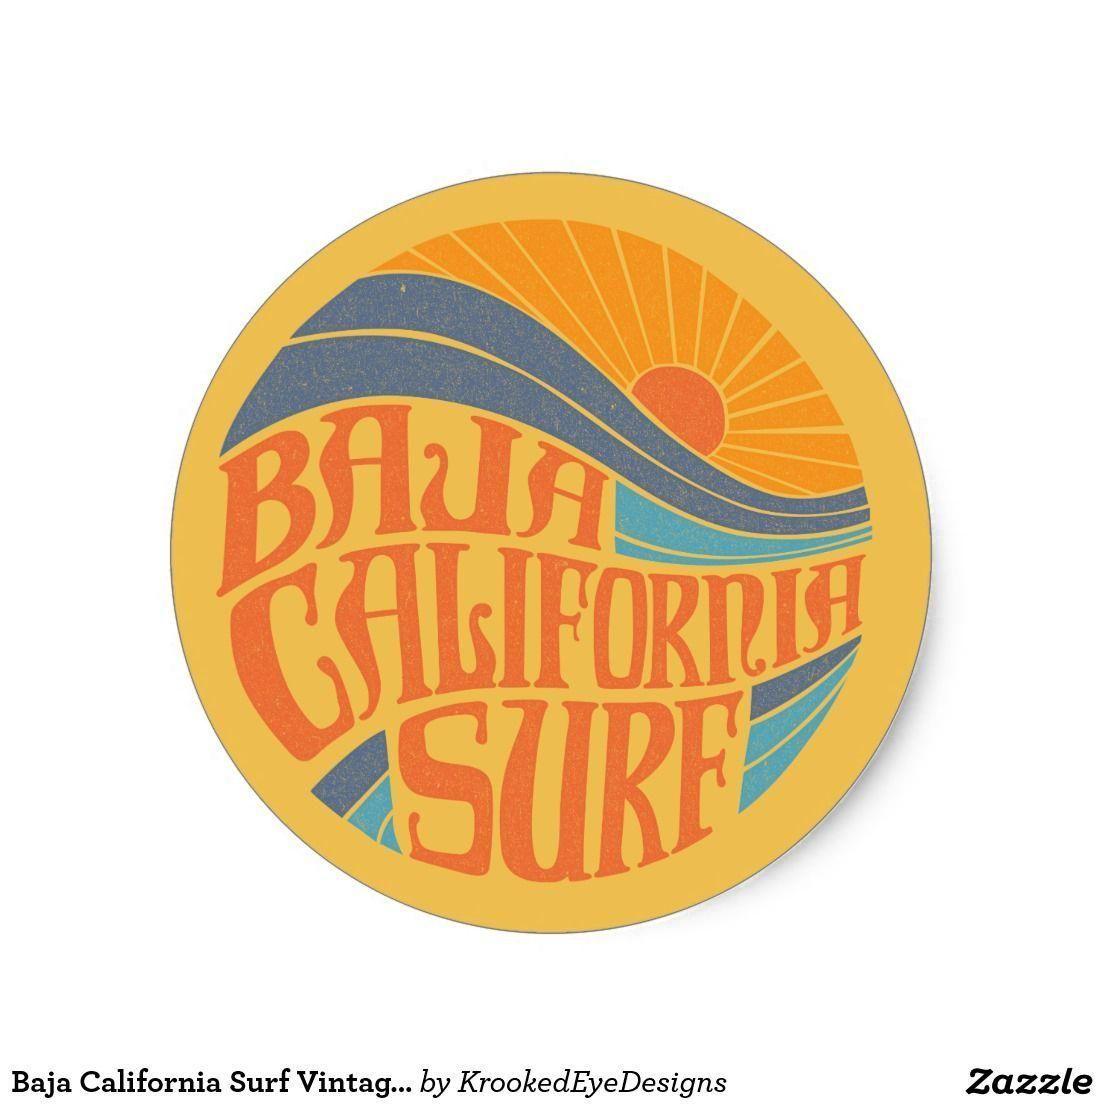 Hippie Retro Logo - Baja California Surf Vintage Sticker. sail away. Surf stickers